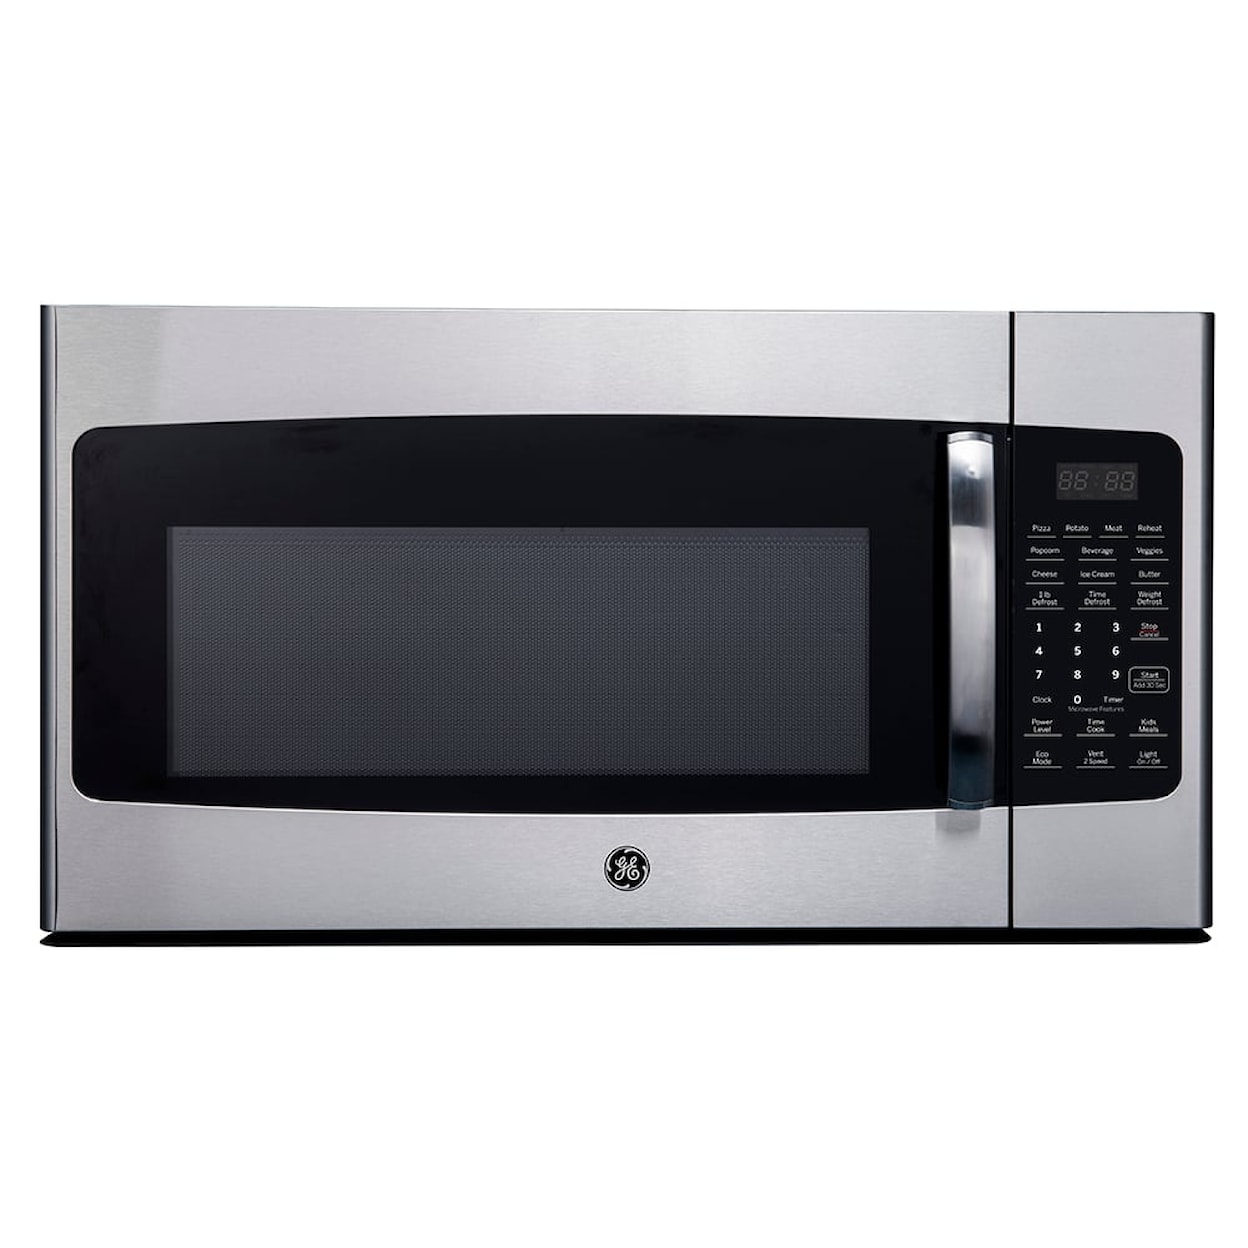 GE Appliances Microwaves Microwave